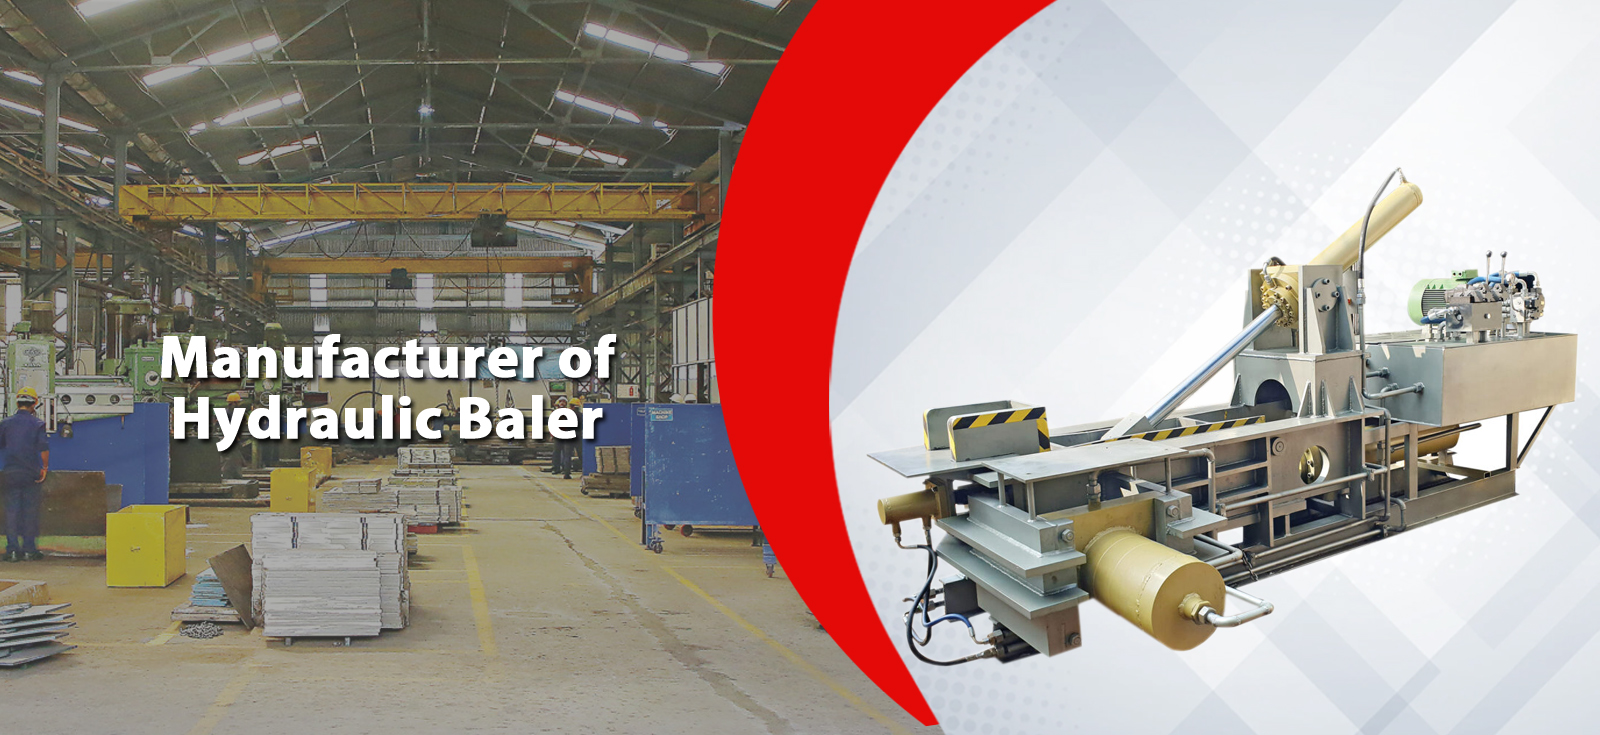 Manufacturer of Hydraulic Baler